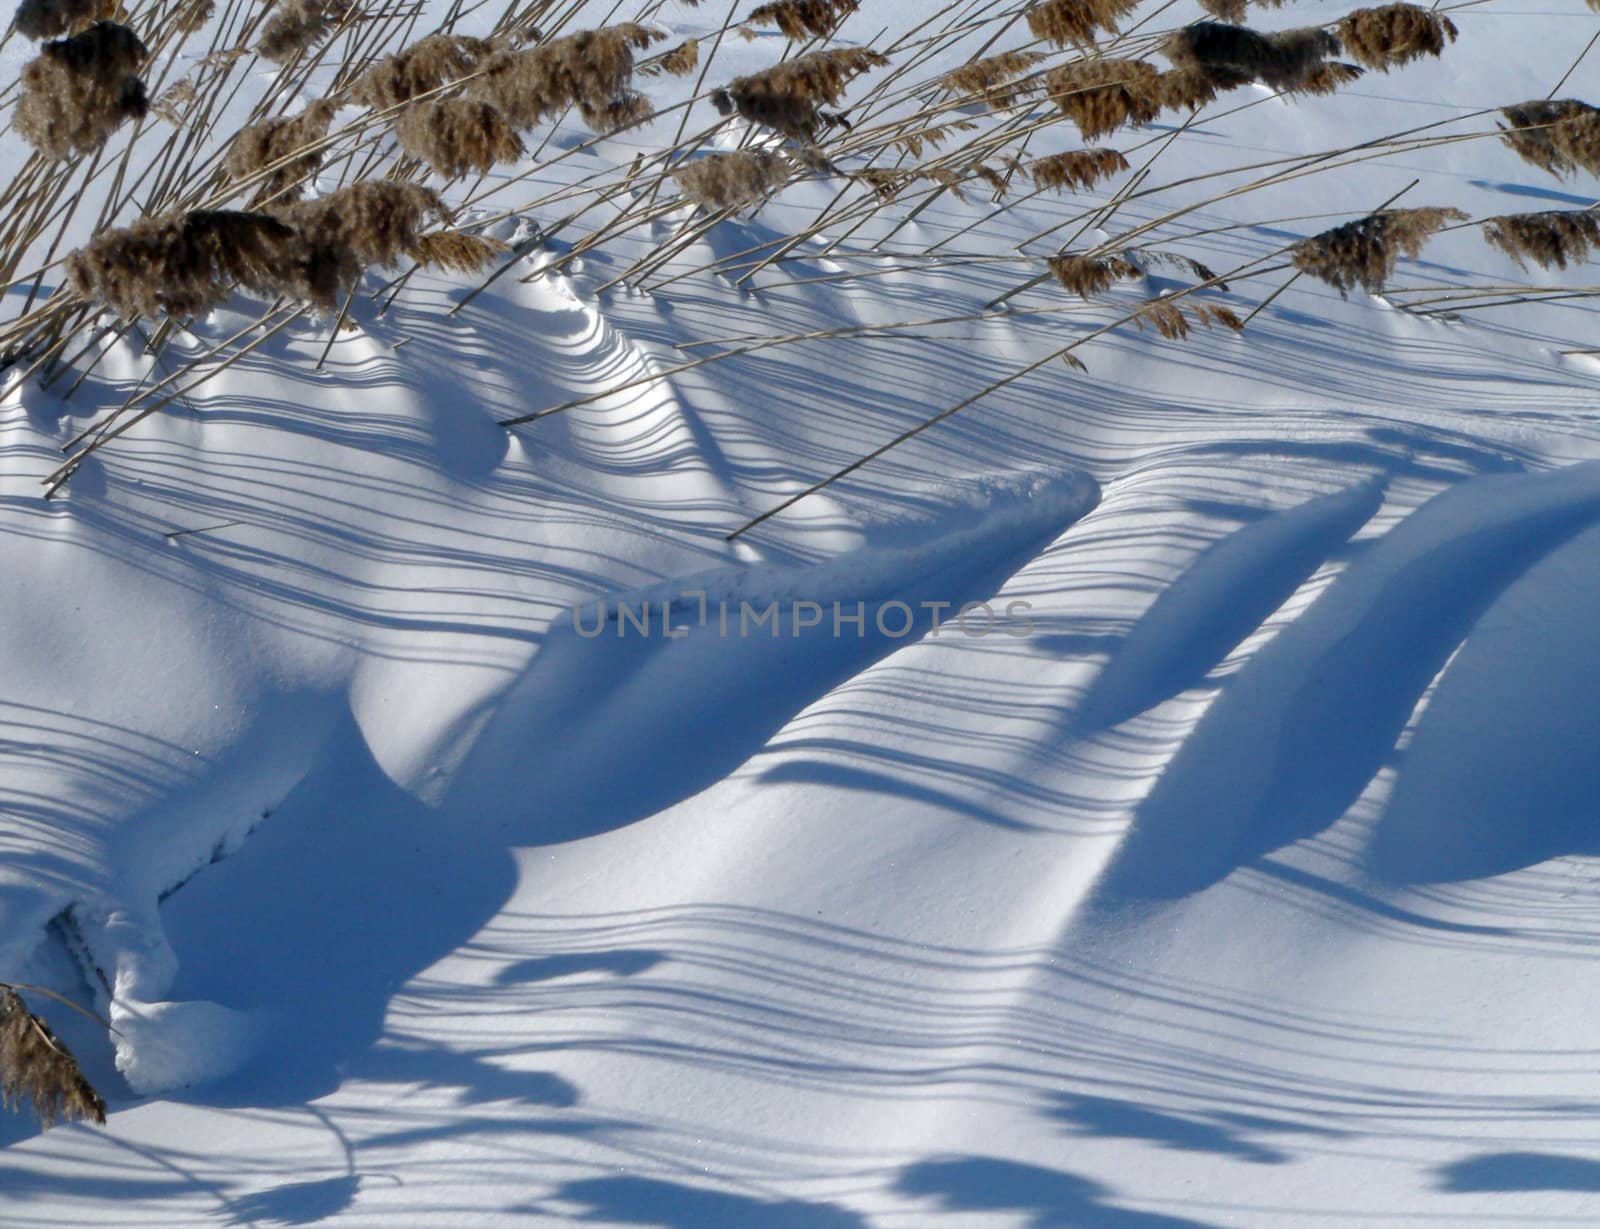 Striped snow by ichip